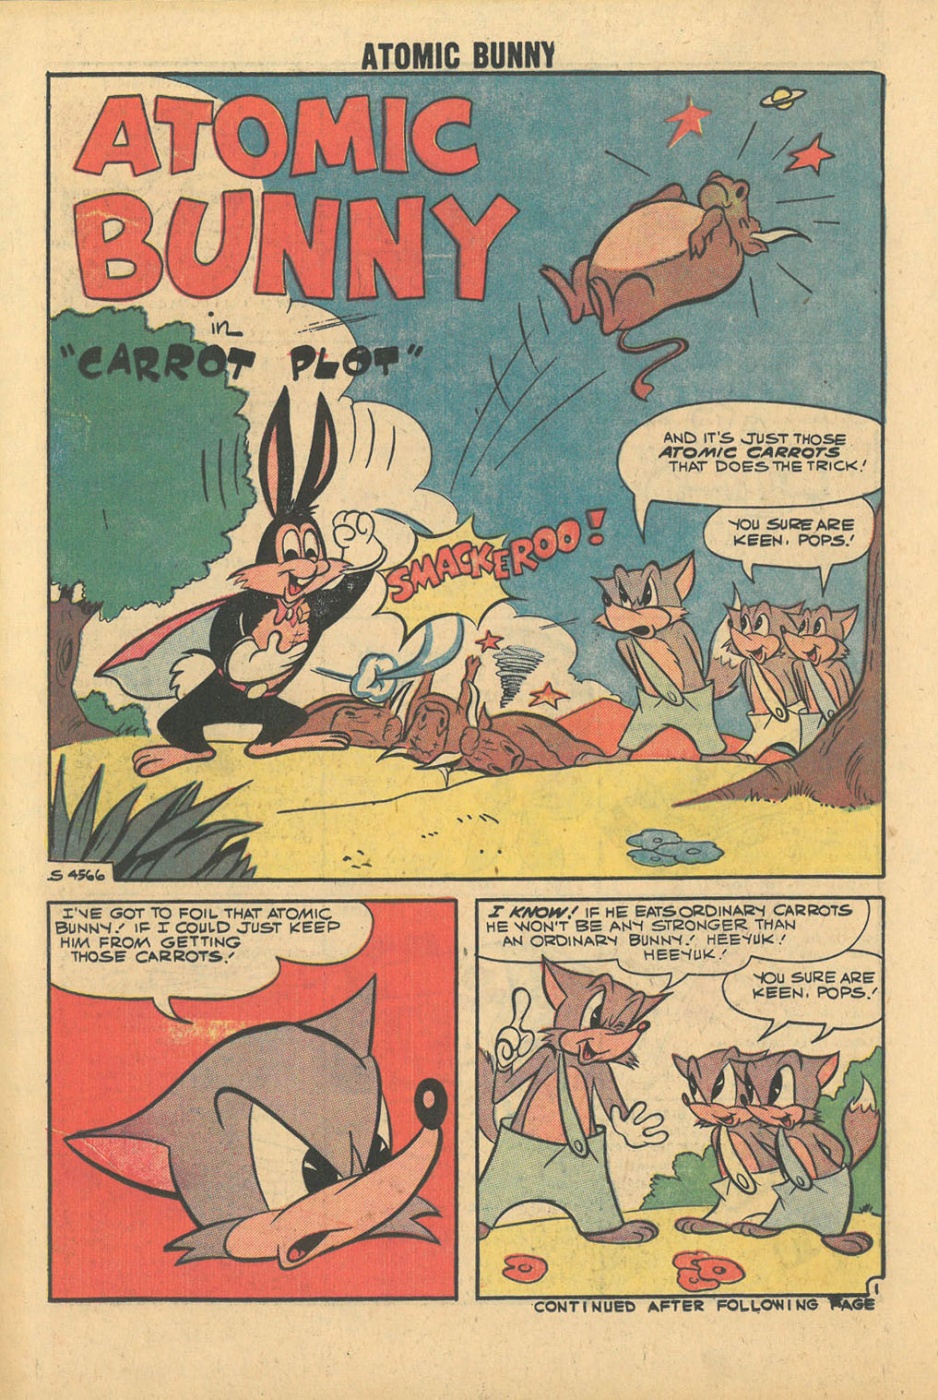 Atomic-Bunny-Comic-Strips (b) (14)